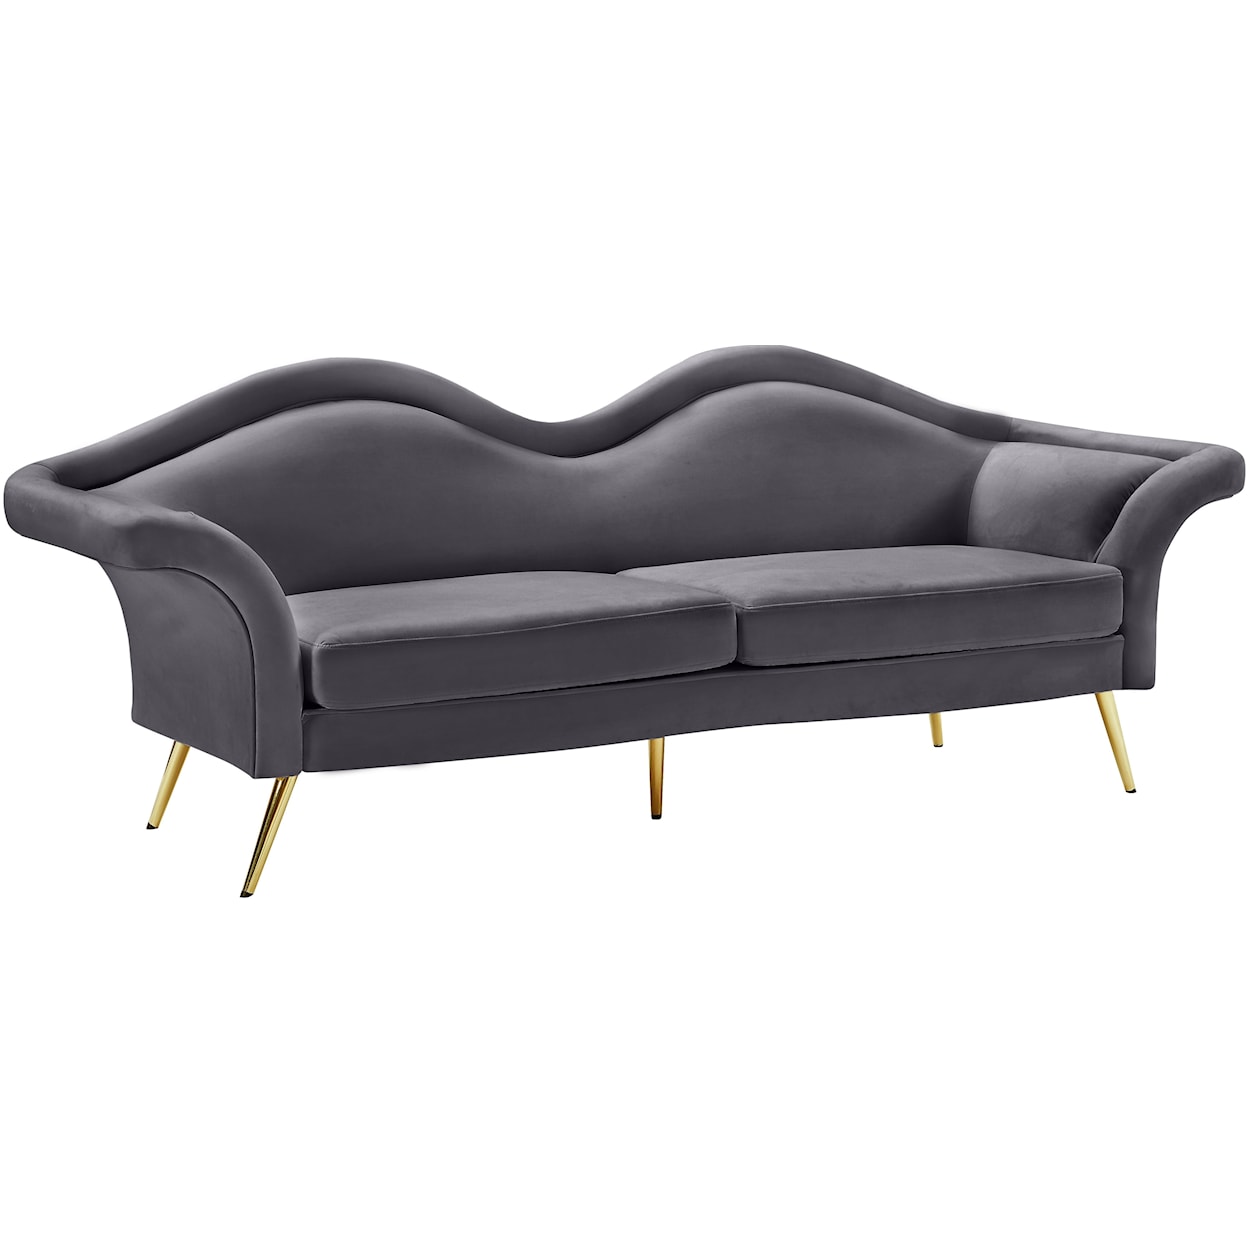 Meridian Furniture Lips Sofa